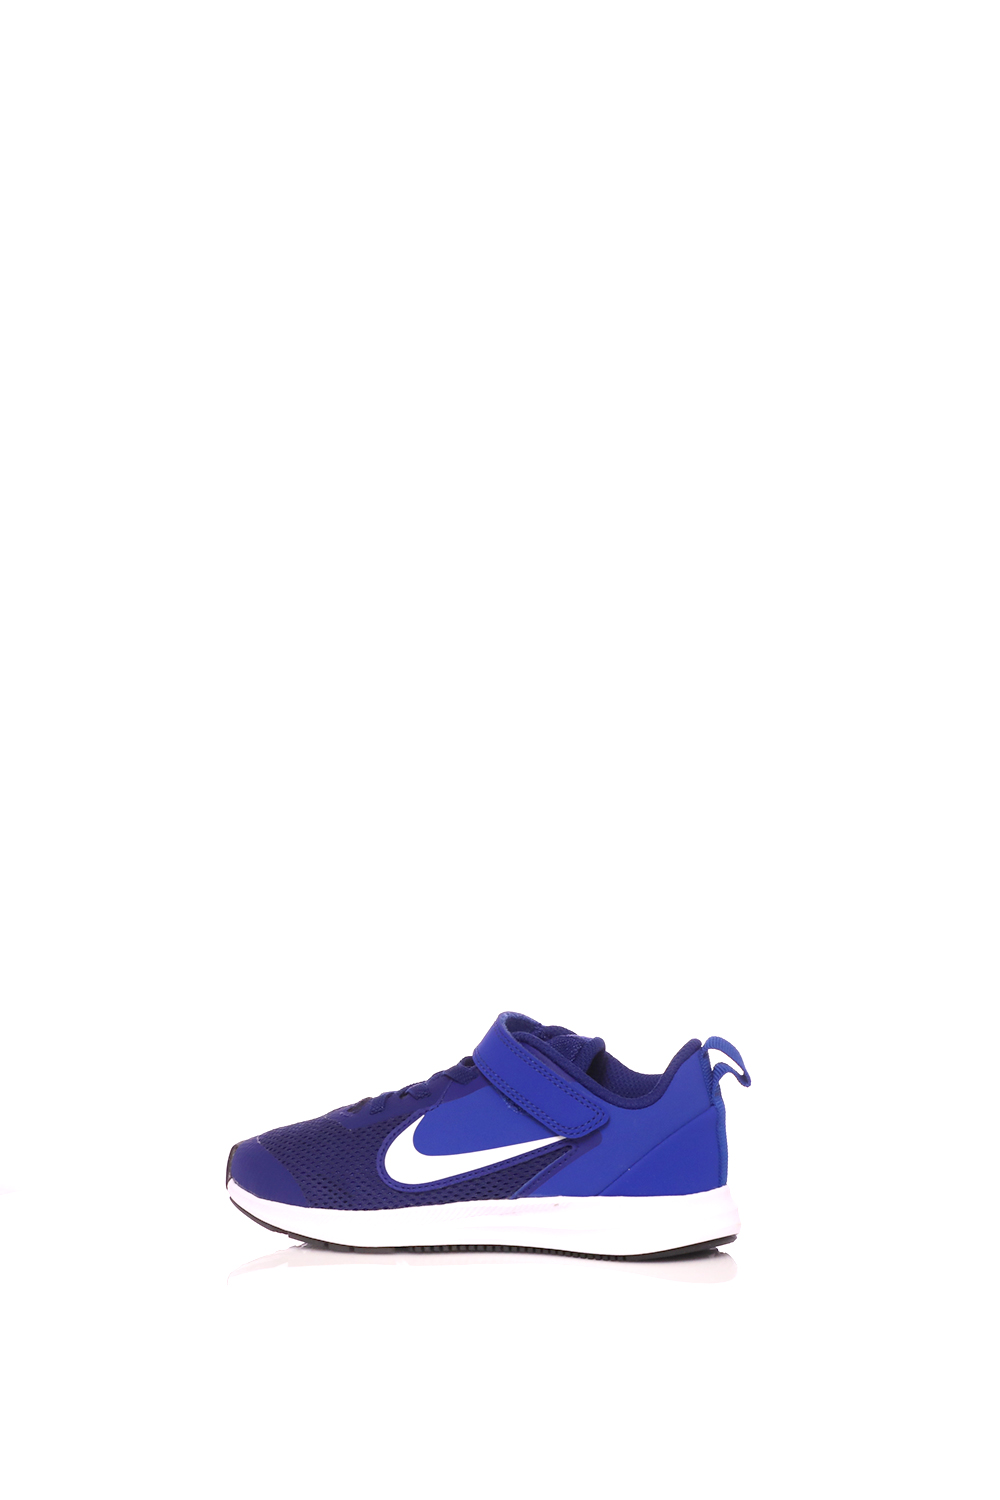 NIKE - Παιδικά παπούτσια running NIKE Downshifter 9 (PSV) μπλε-λευκά Παιδικά/Boys/Παπούτσια/Αθλητικά